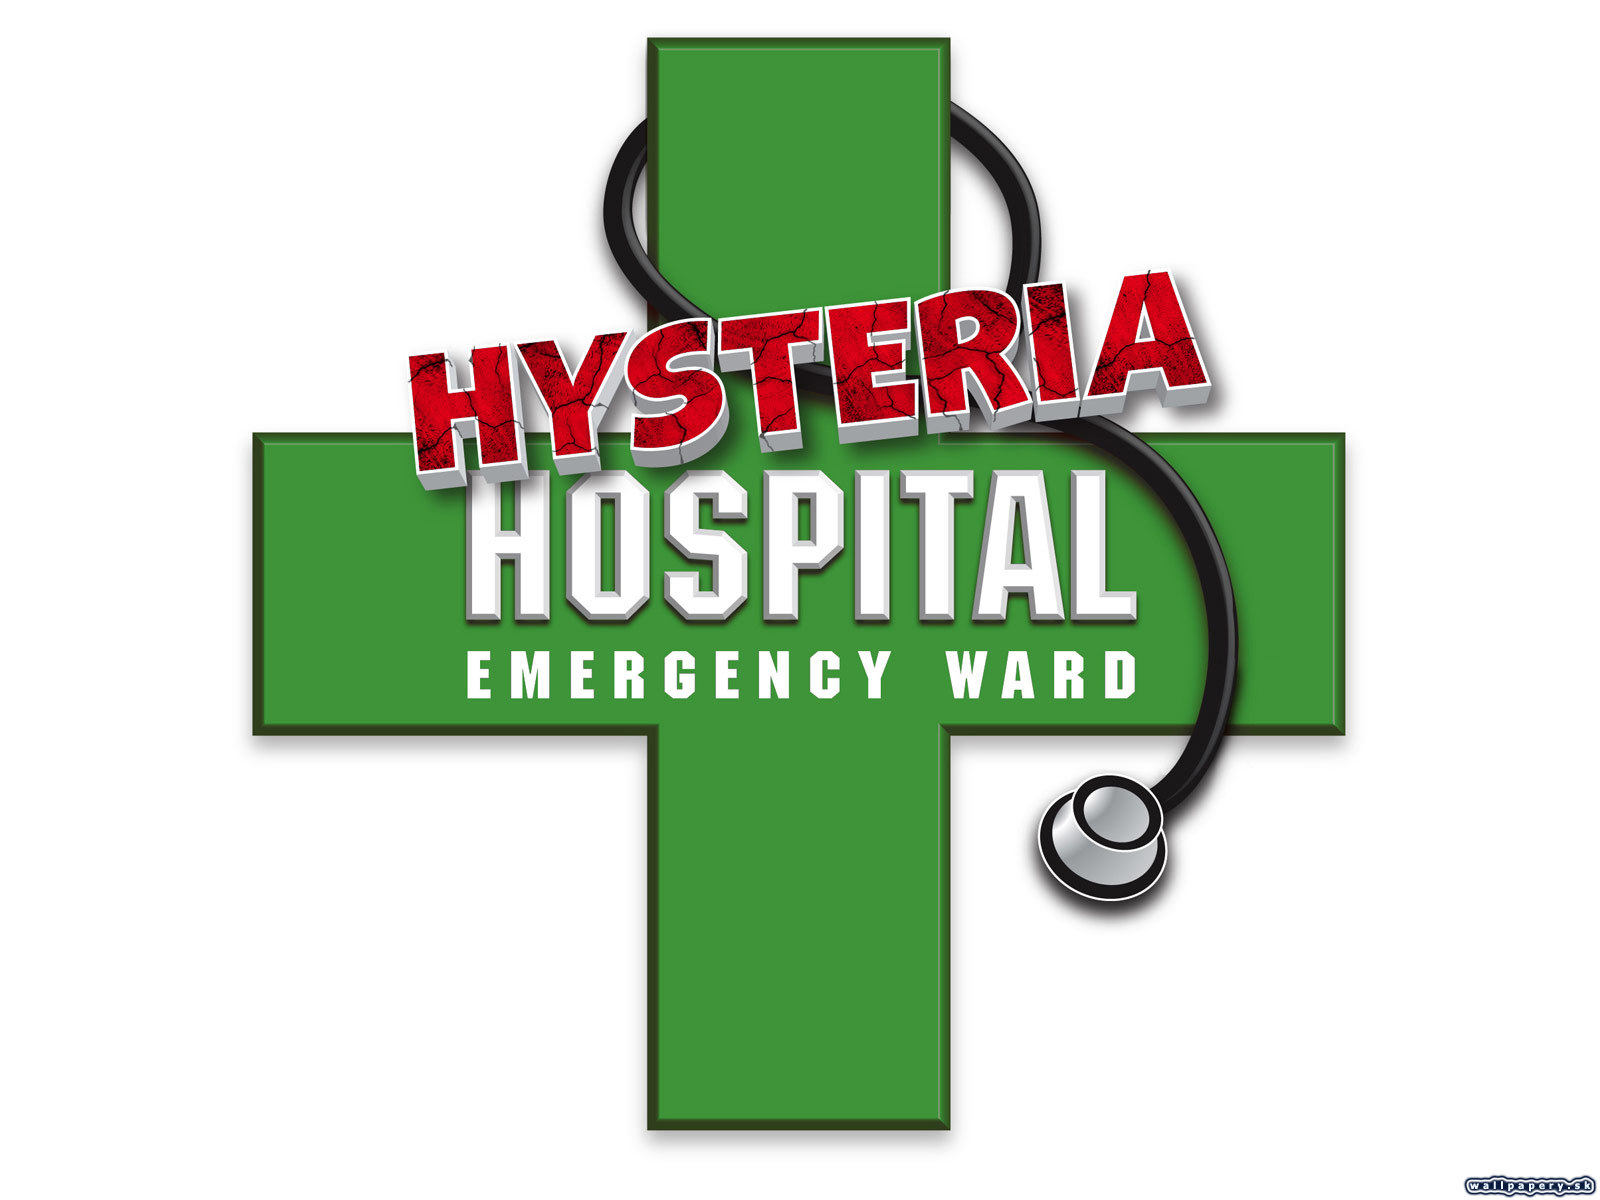 Hysteria Hospital: Emergency Ward - wallpaper 2